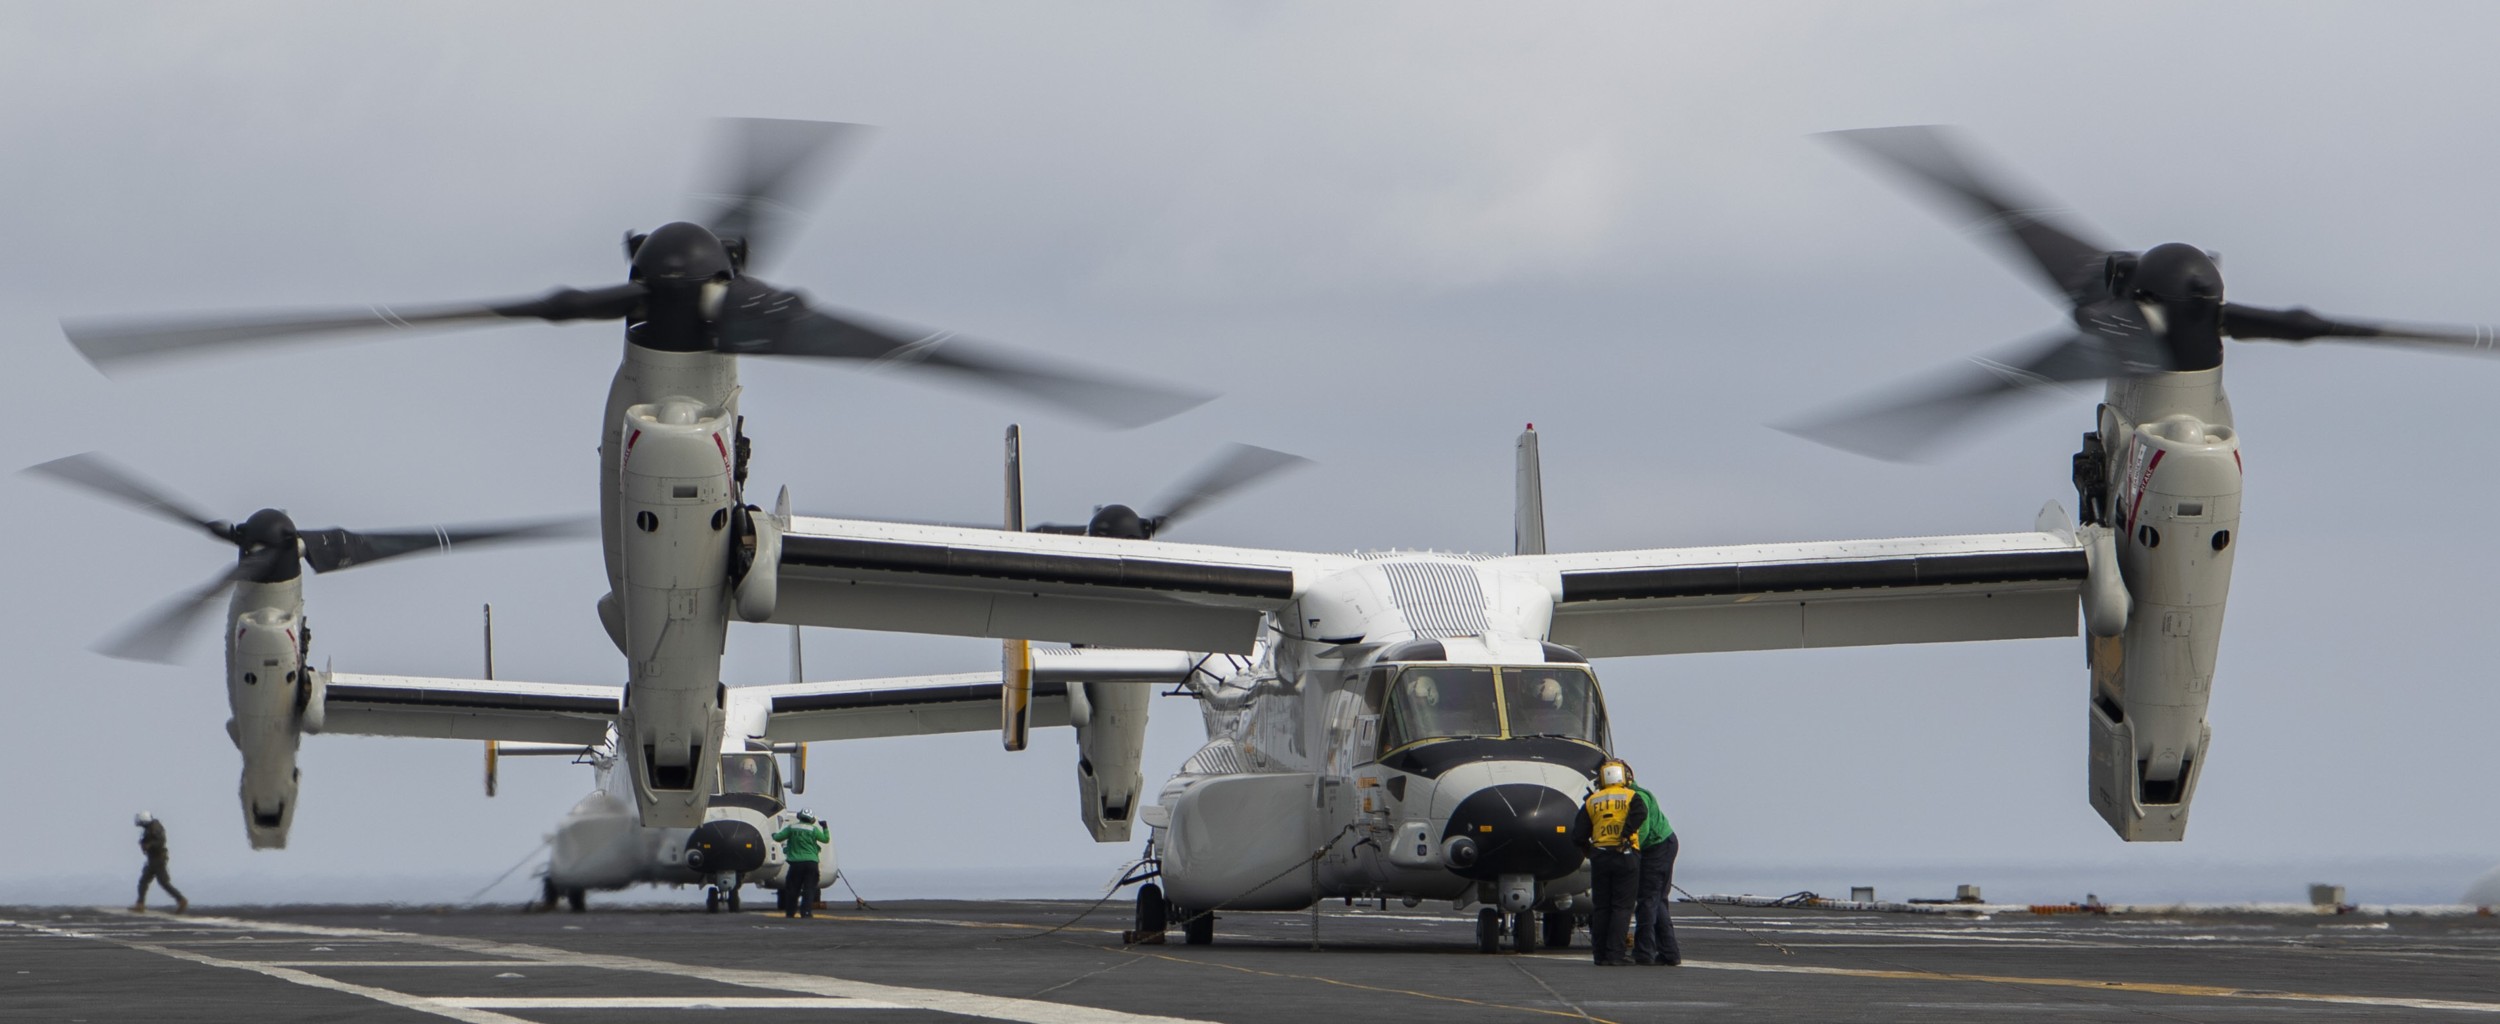 vrm-30 titans fleet logistics multi mission squadron us navy cmv-22b osprey uss nimitz 108